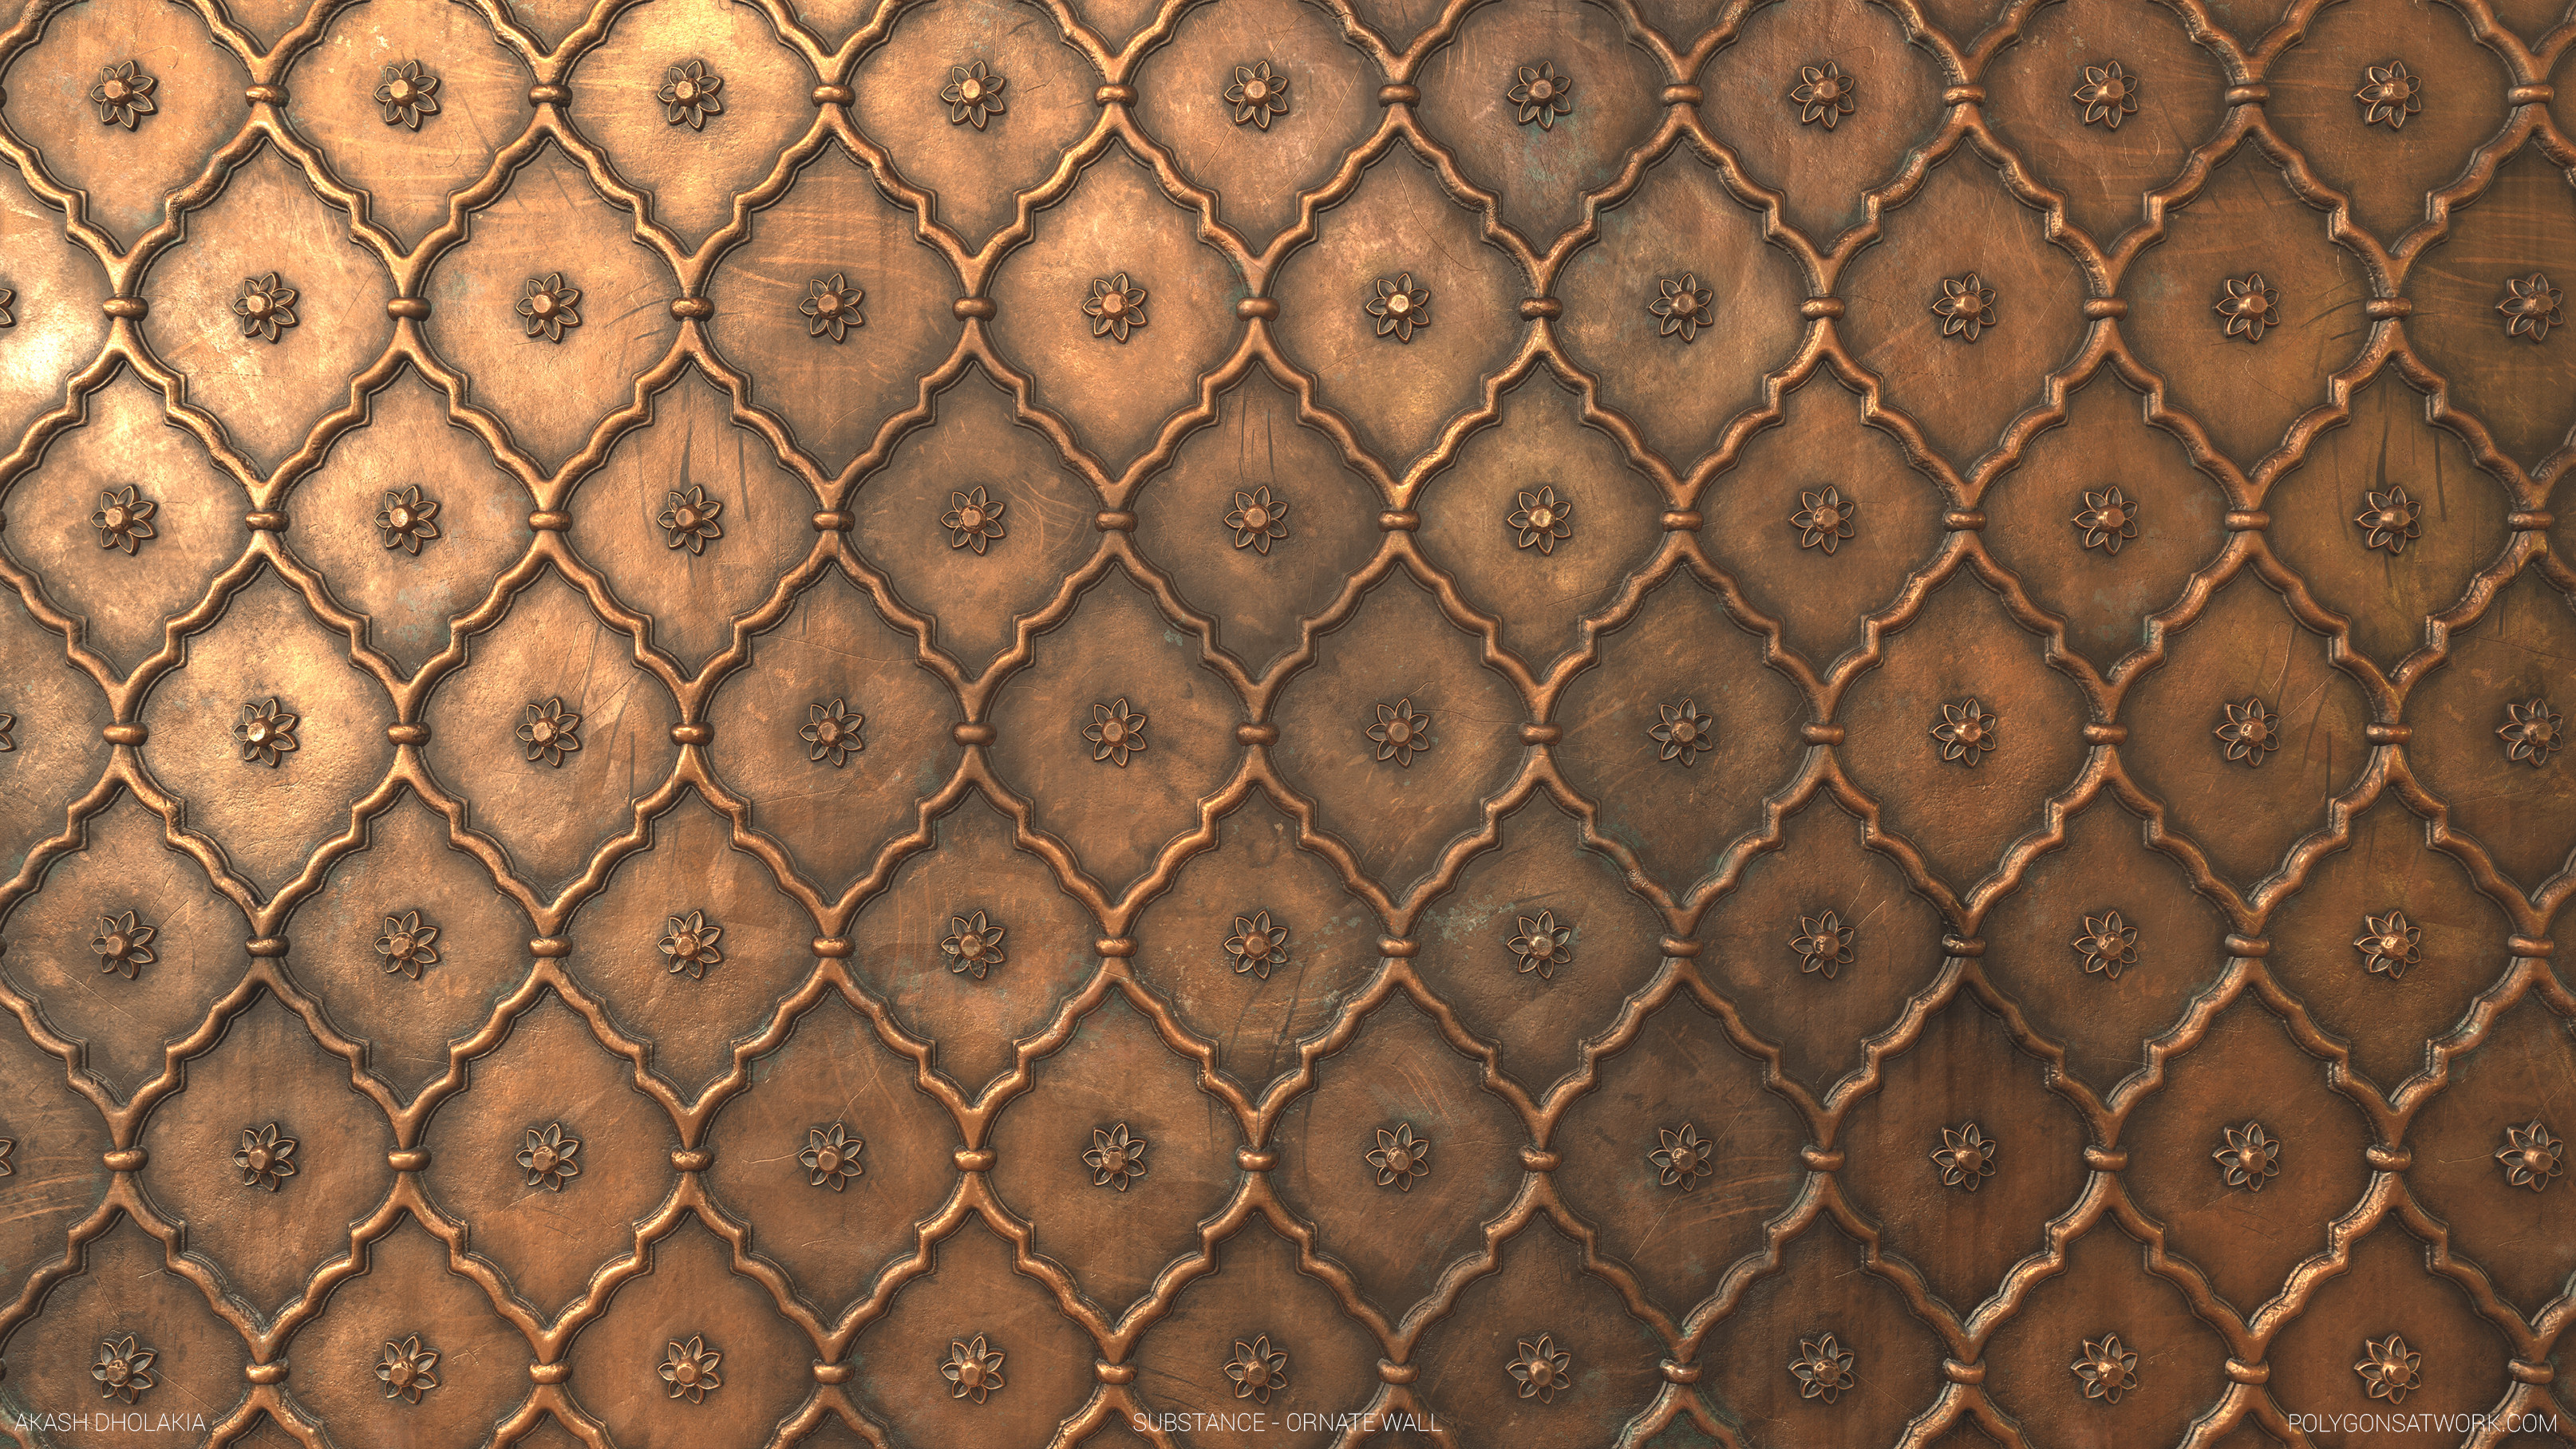 Worn Copper Ornate Door Material.